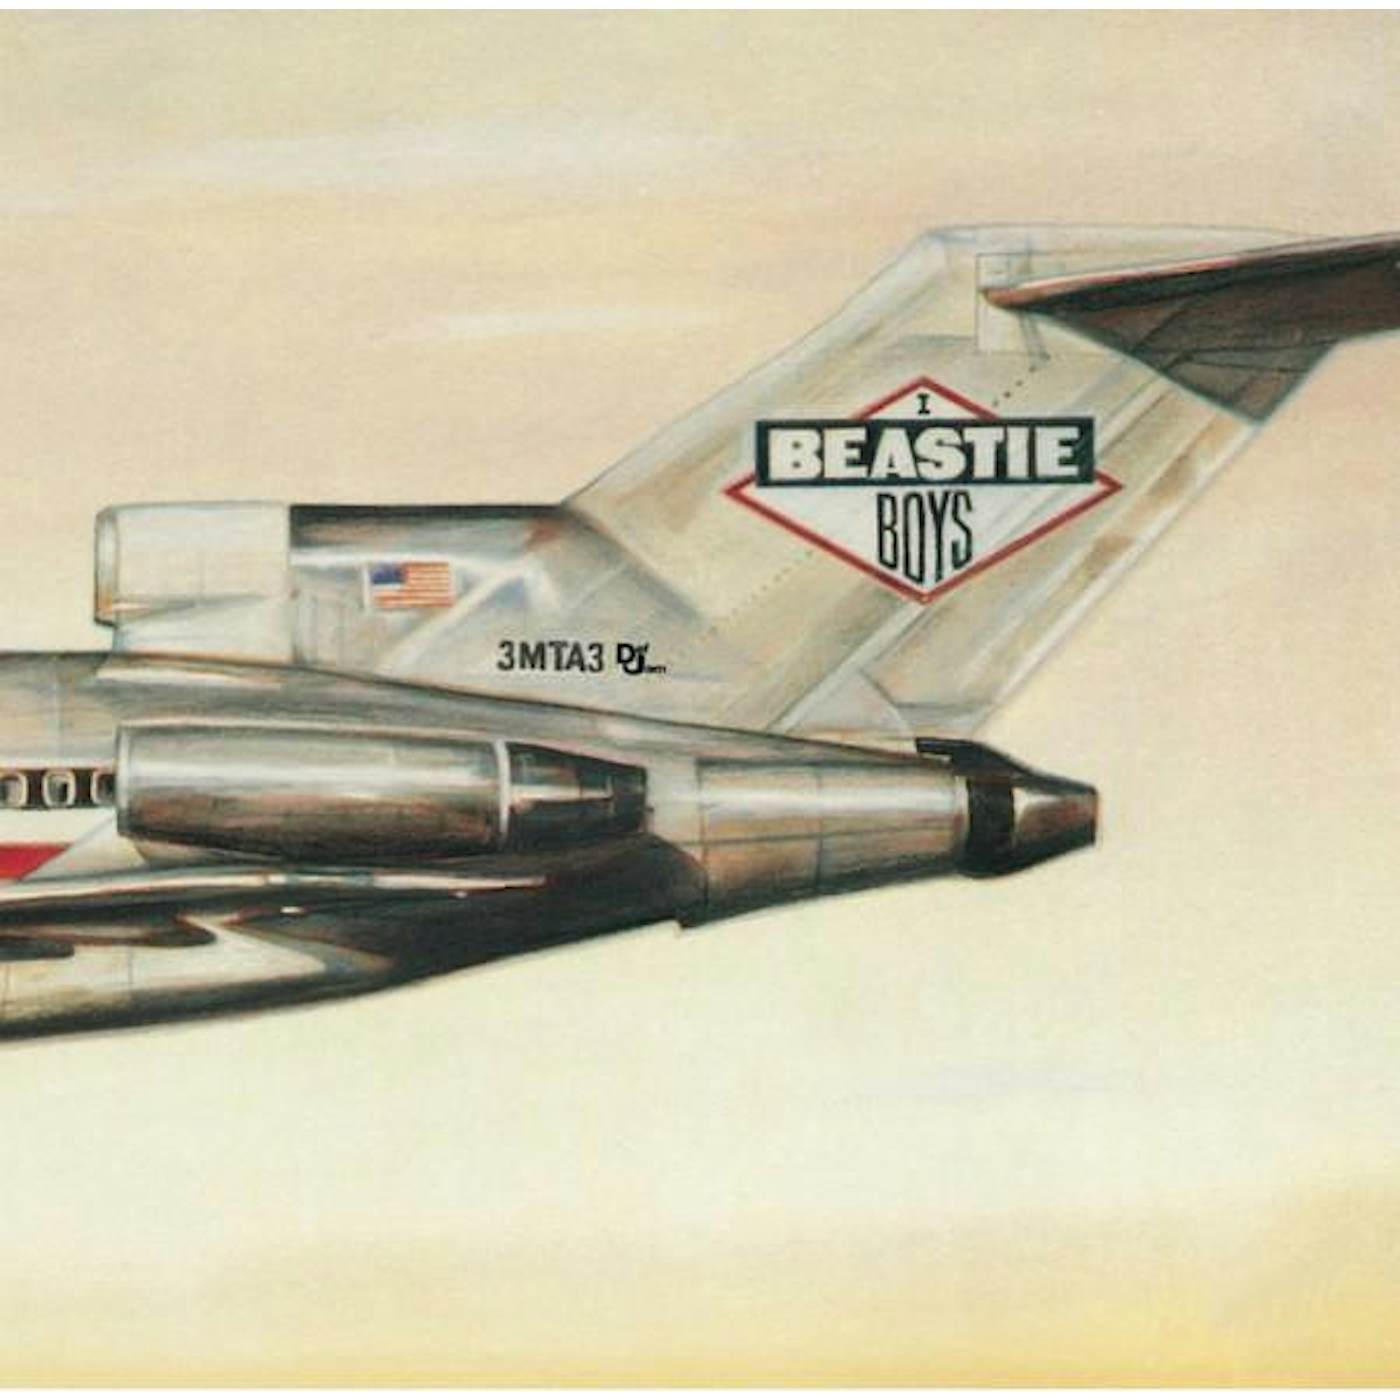 Beastie Boys Licensed To Ill (30th Anniversary Edition) Vinyl Record